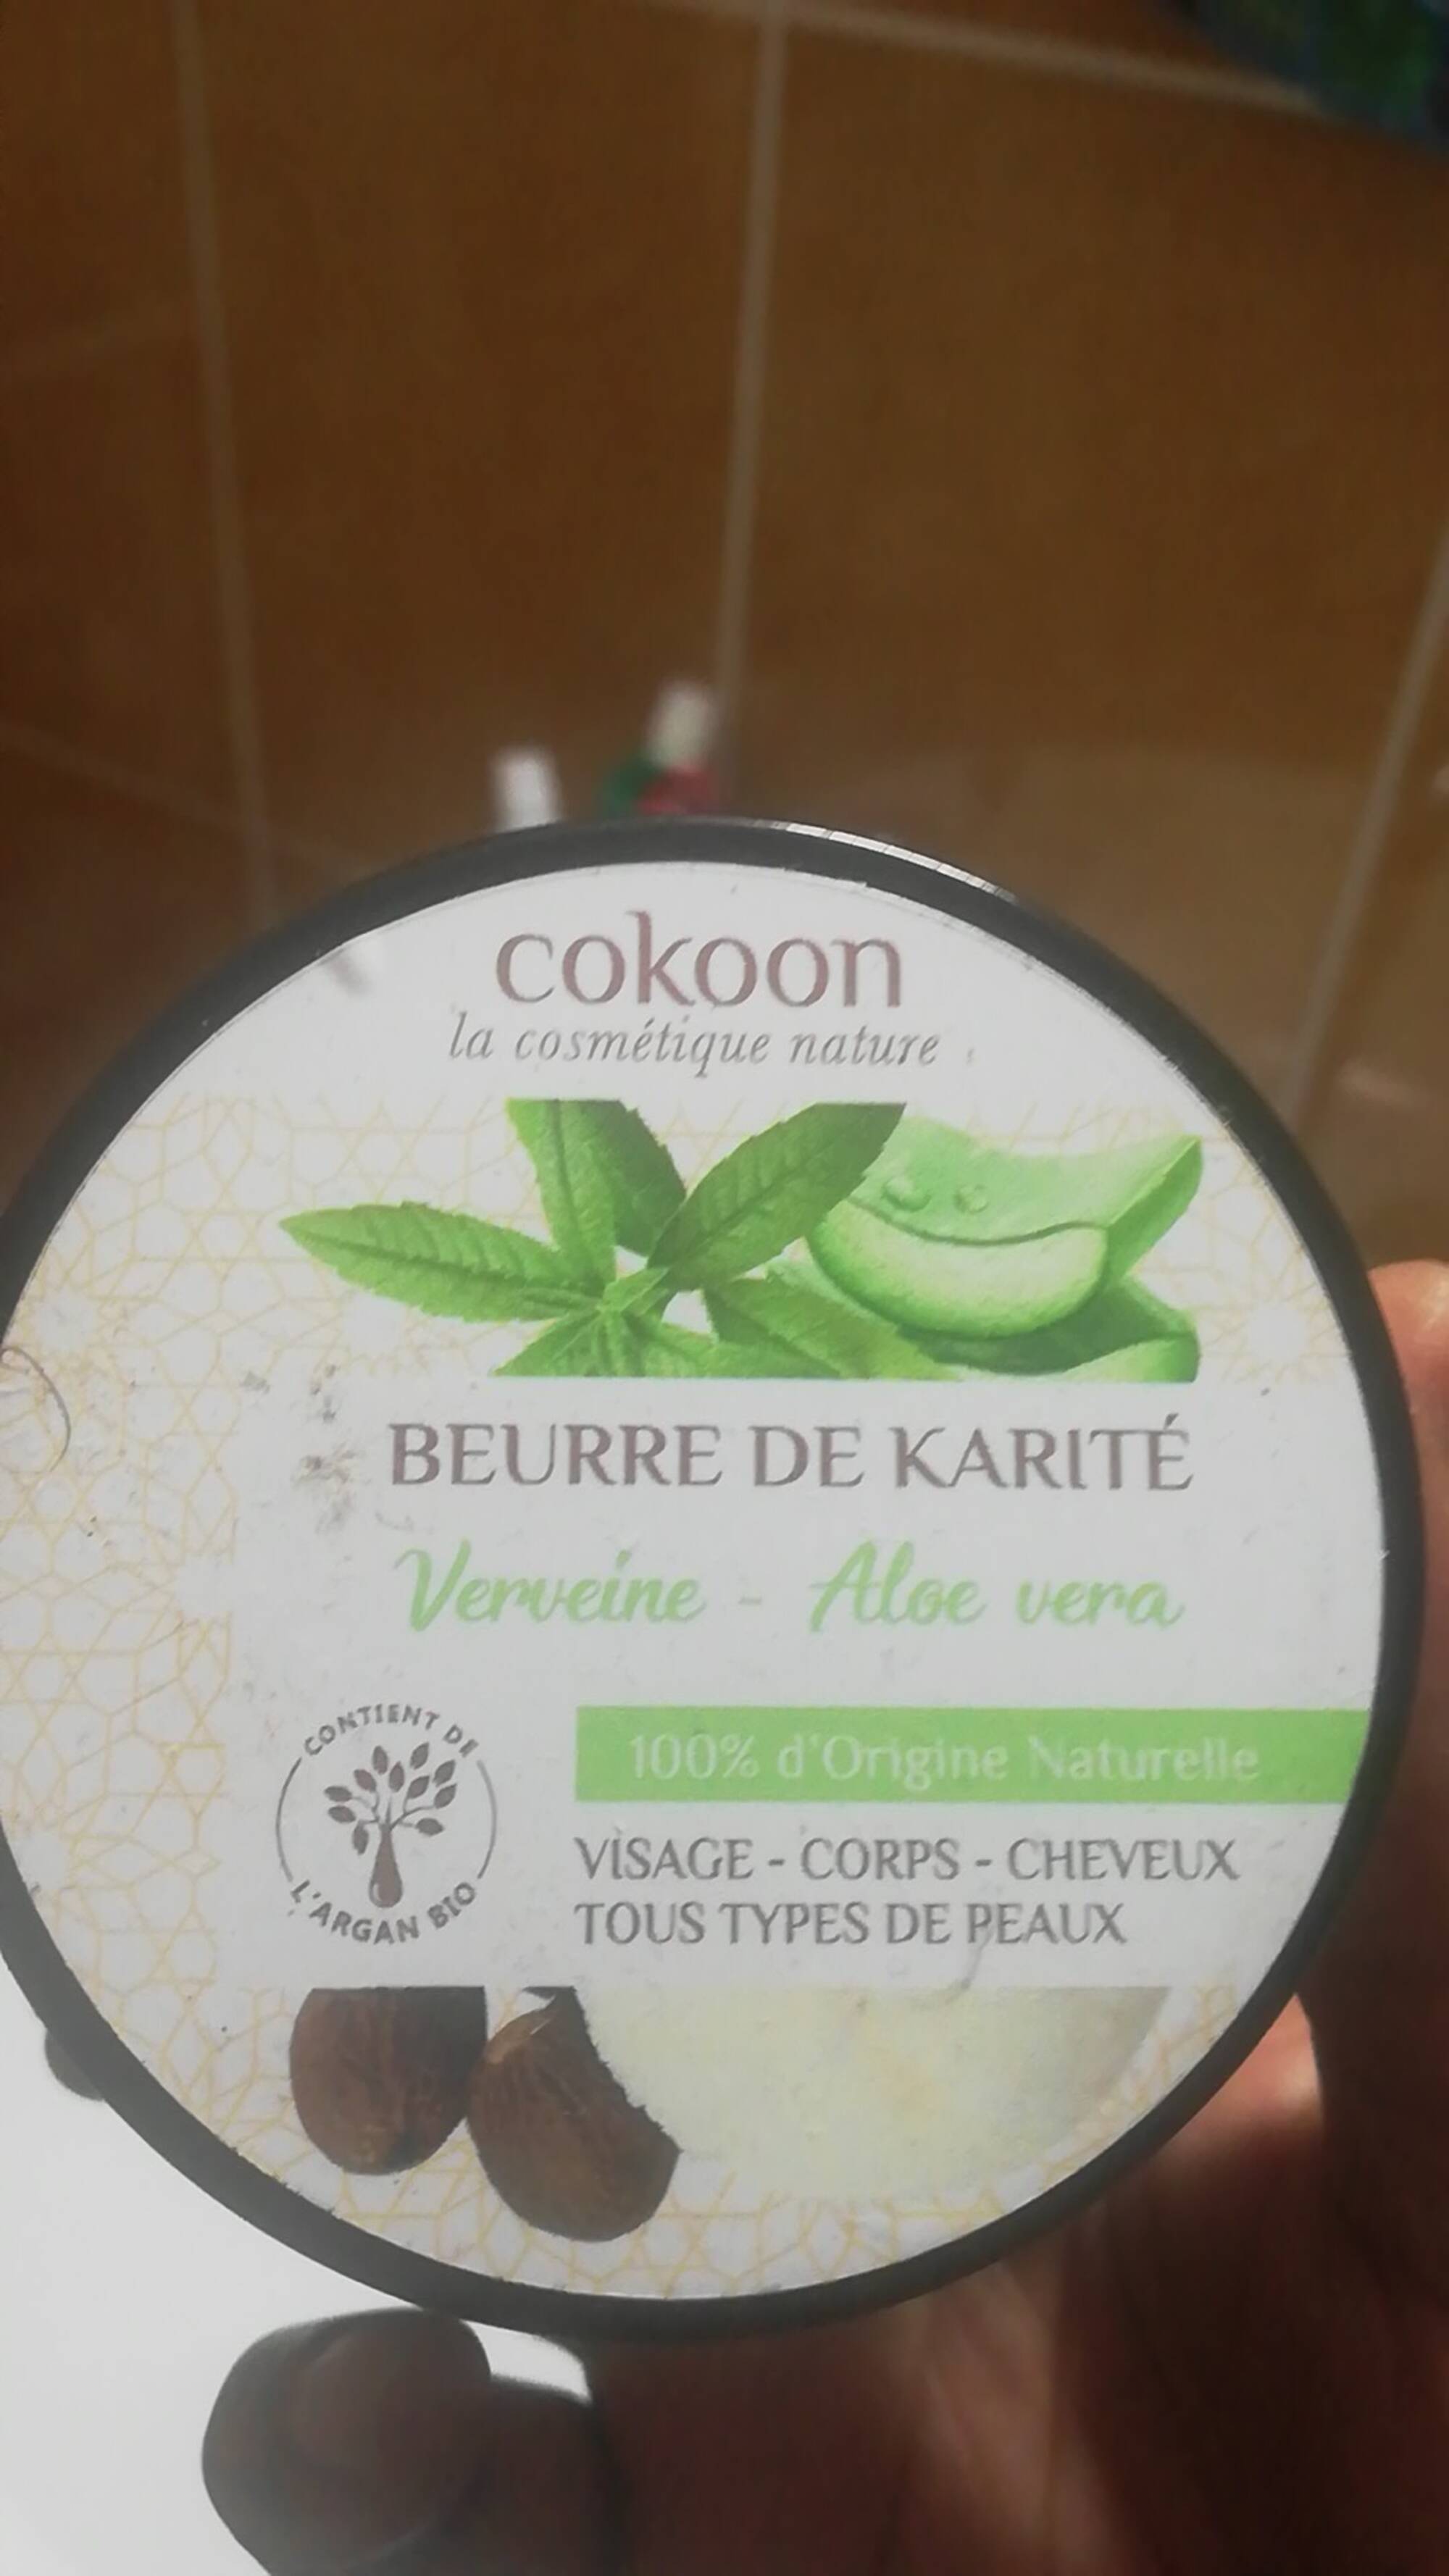 COKOON - Verveine aloe vera - Beurre de karité 